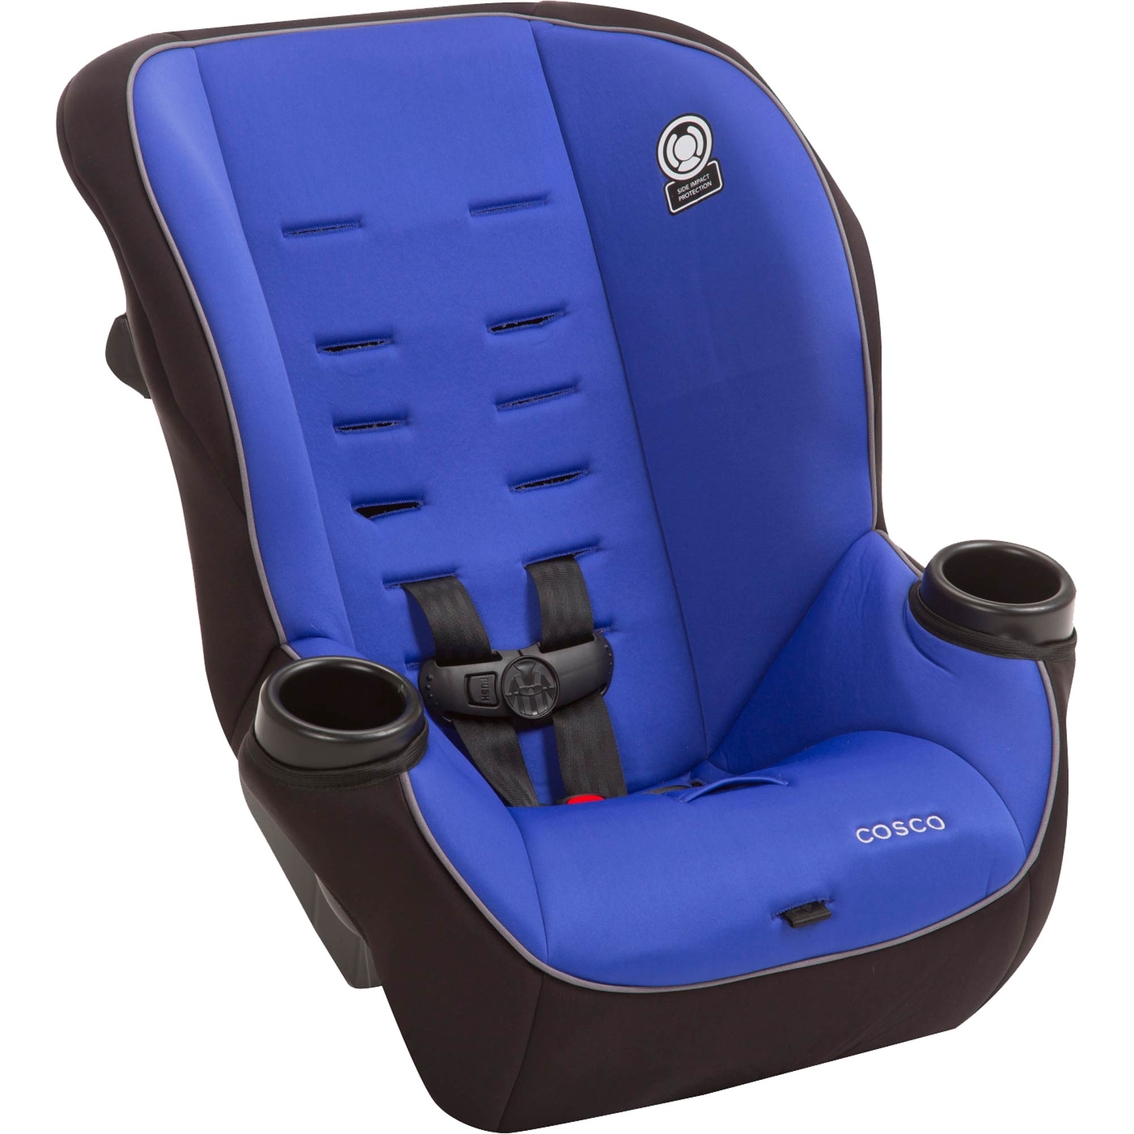 Cosco Onlook 2 in 1 Convertible Car Seat - Image 2 of 6